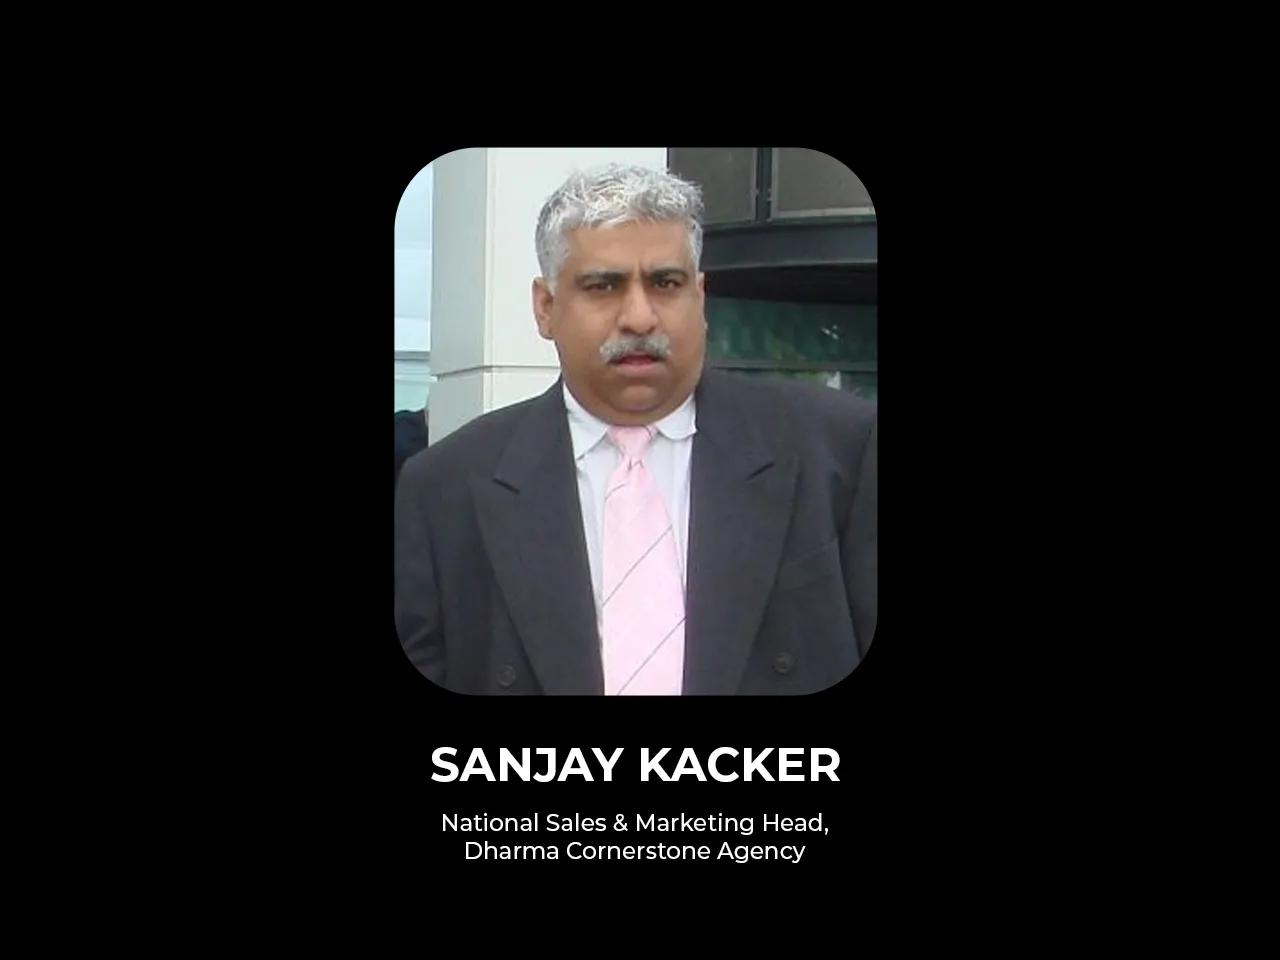 Sanjay Kacker joins Dharma Cornerstone Agency as National Sales & Marketing Head